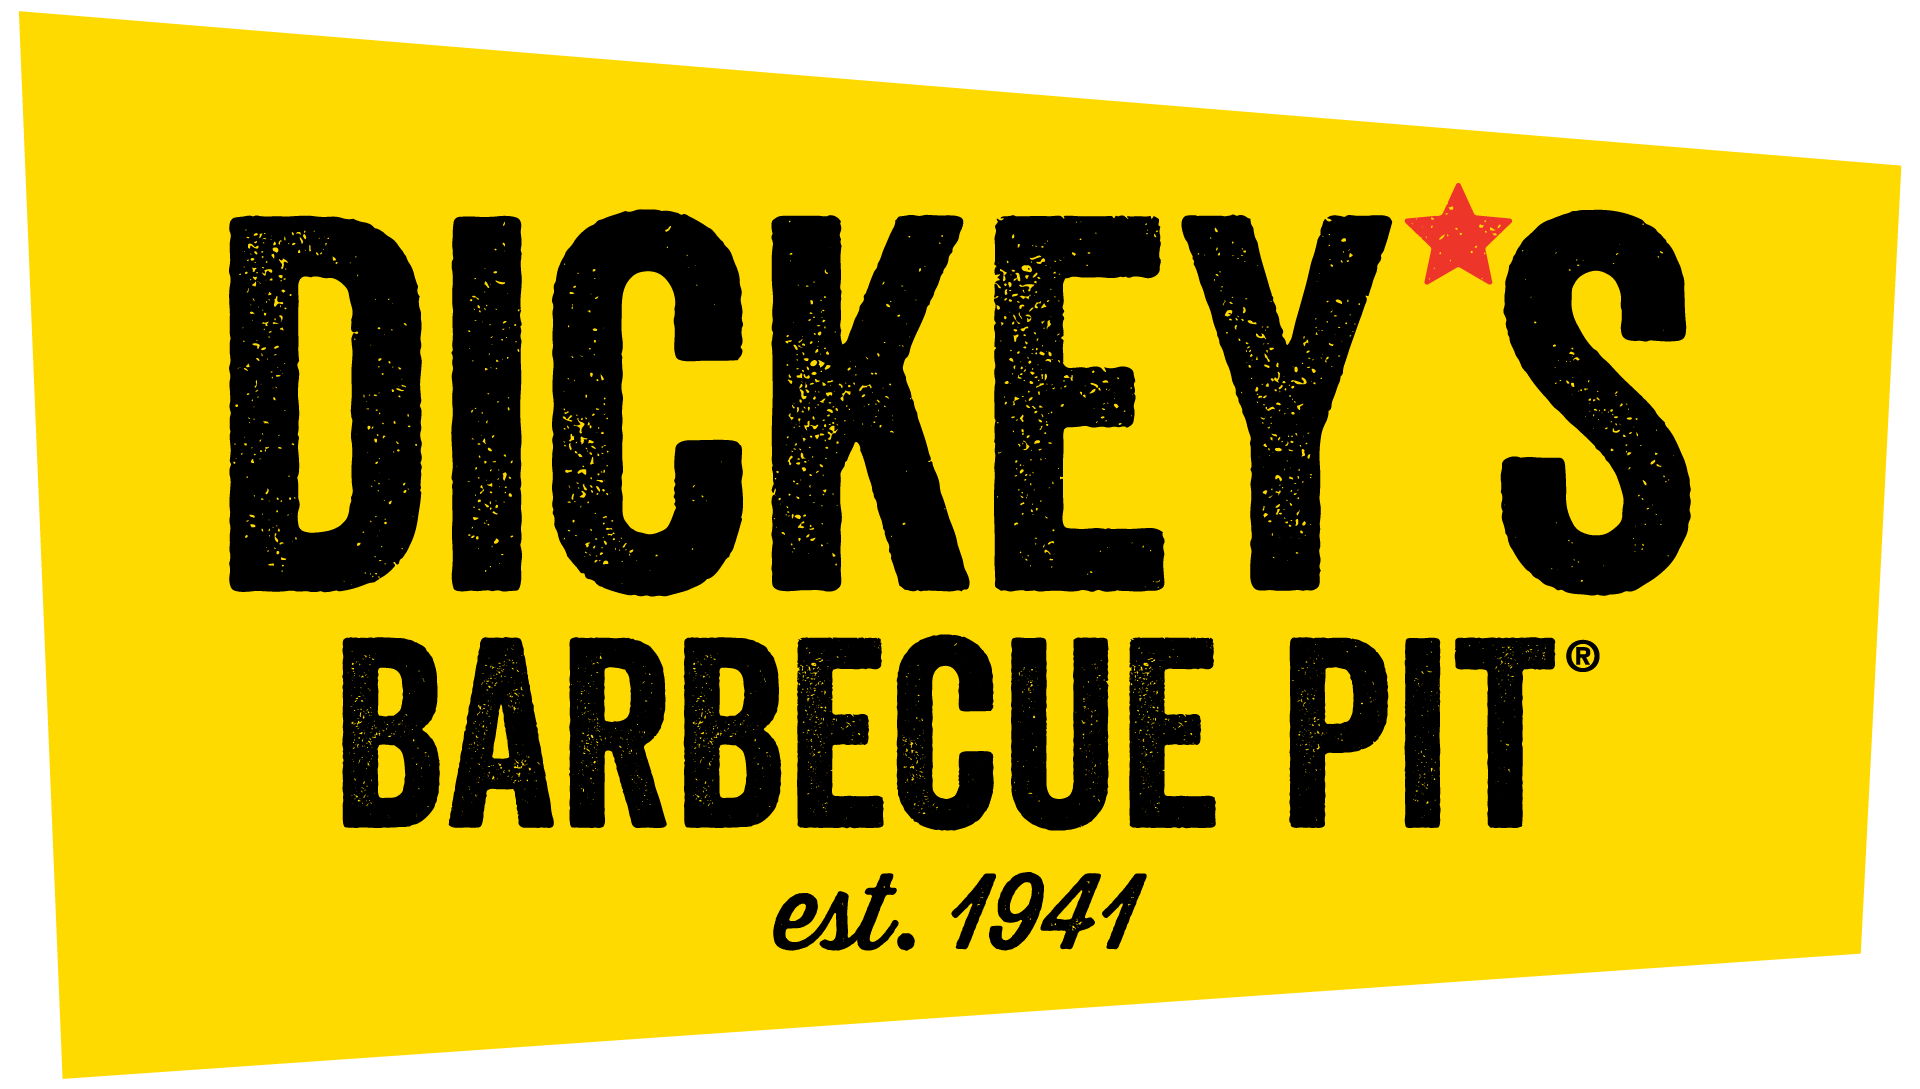 Dickey’s Barbecue Ce